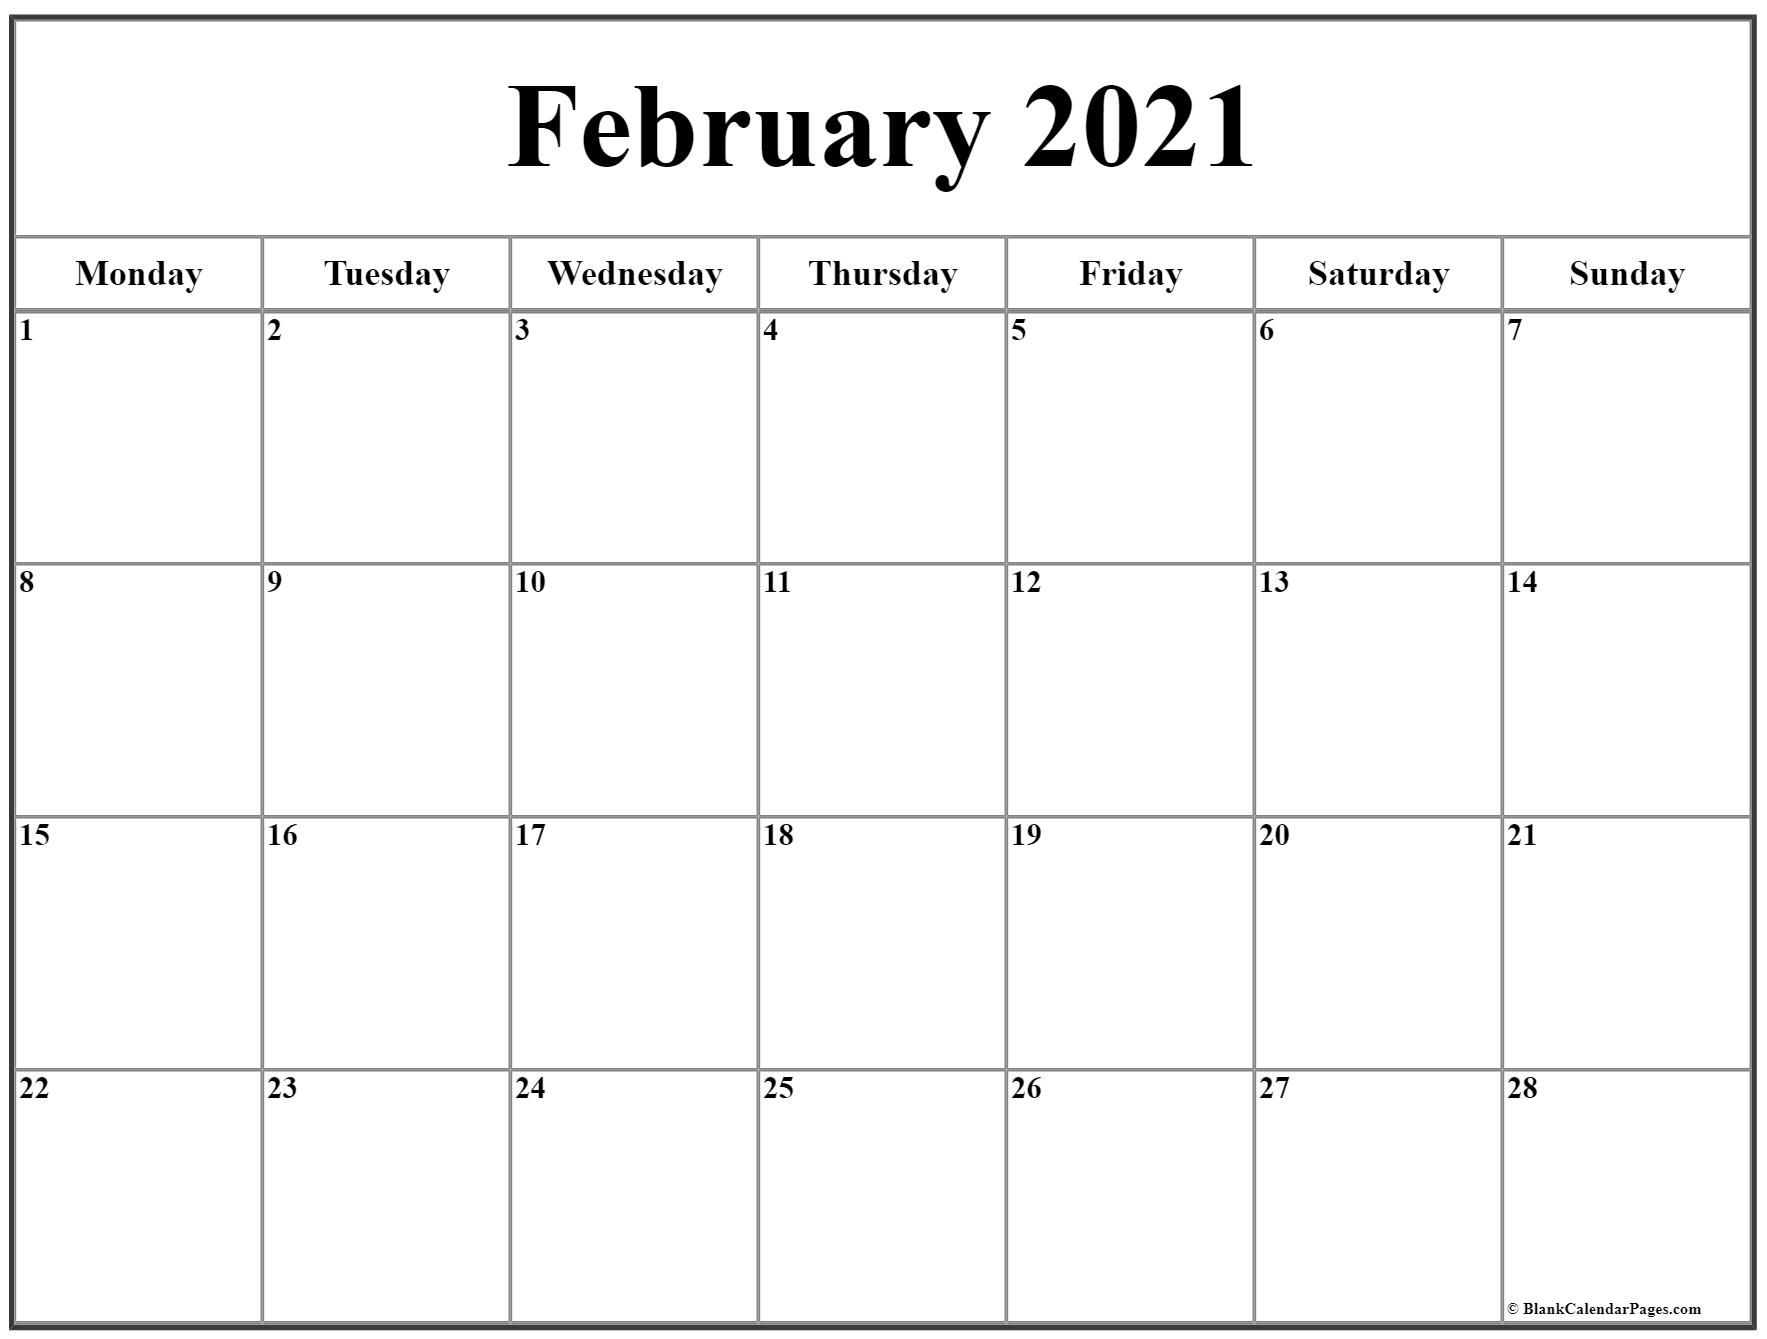 February 2021 Monday Calendar | Monday To Sunday